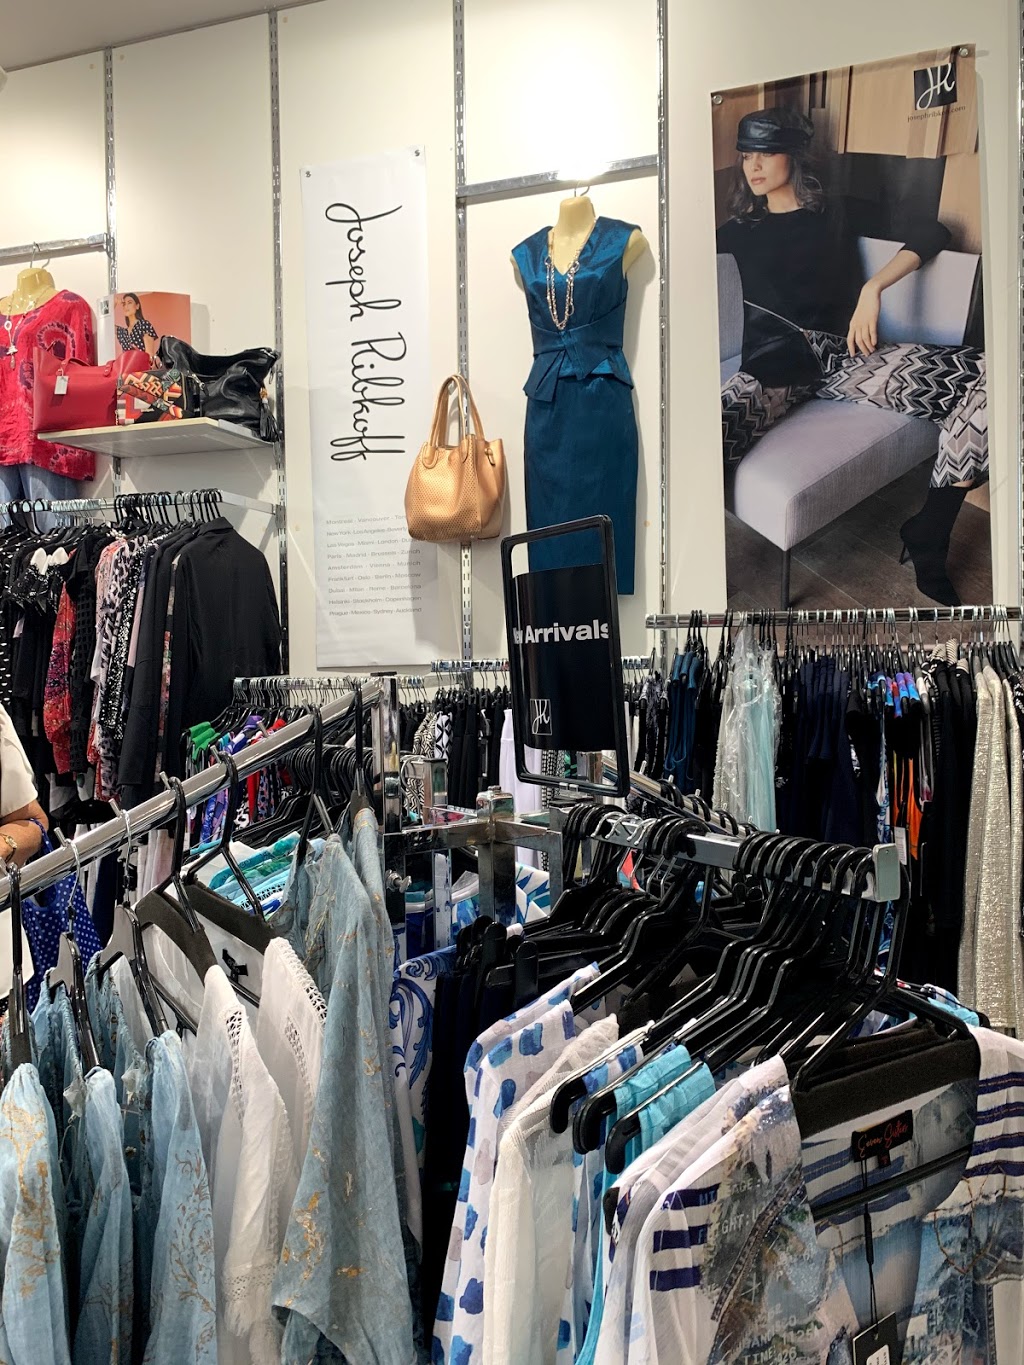 Change Alley | clothing store | Runaway Bay Ave, Runaway Bay QLD 4216, Australia